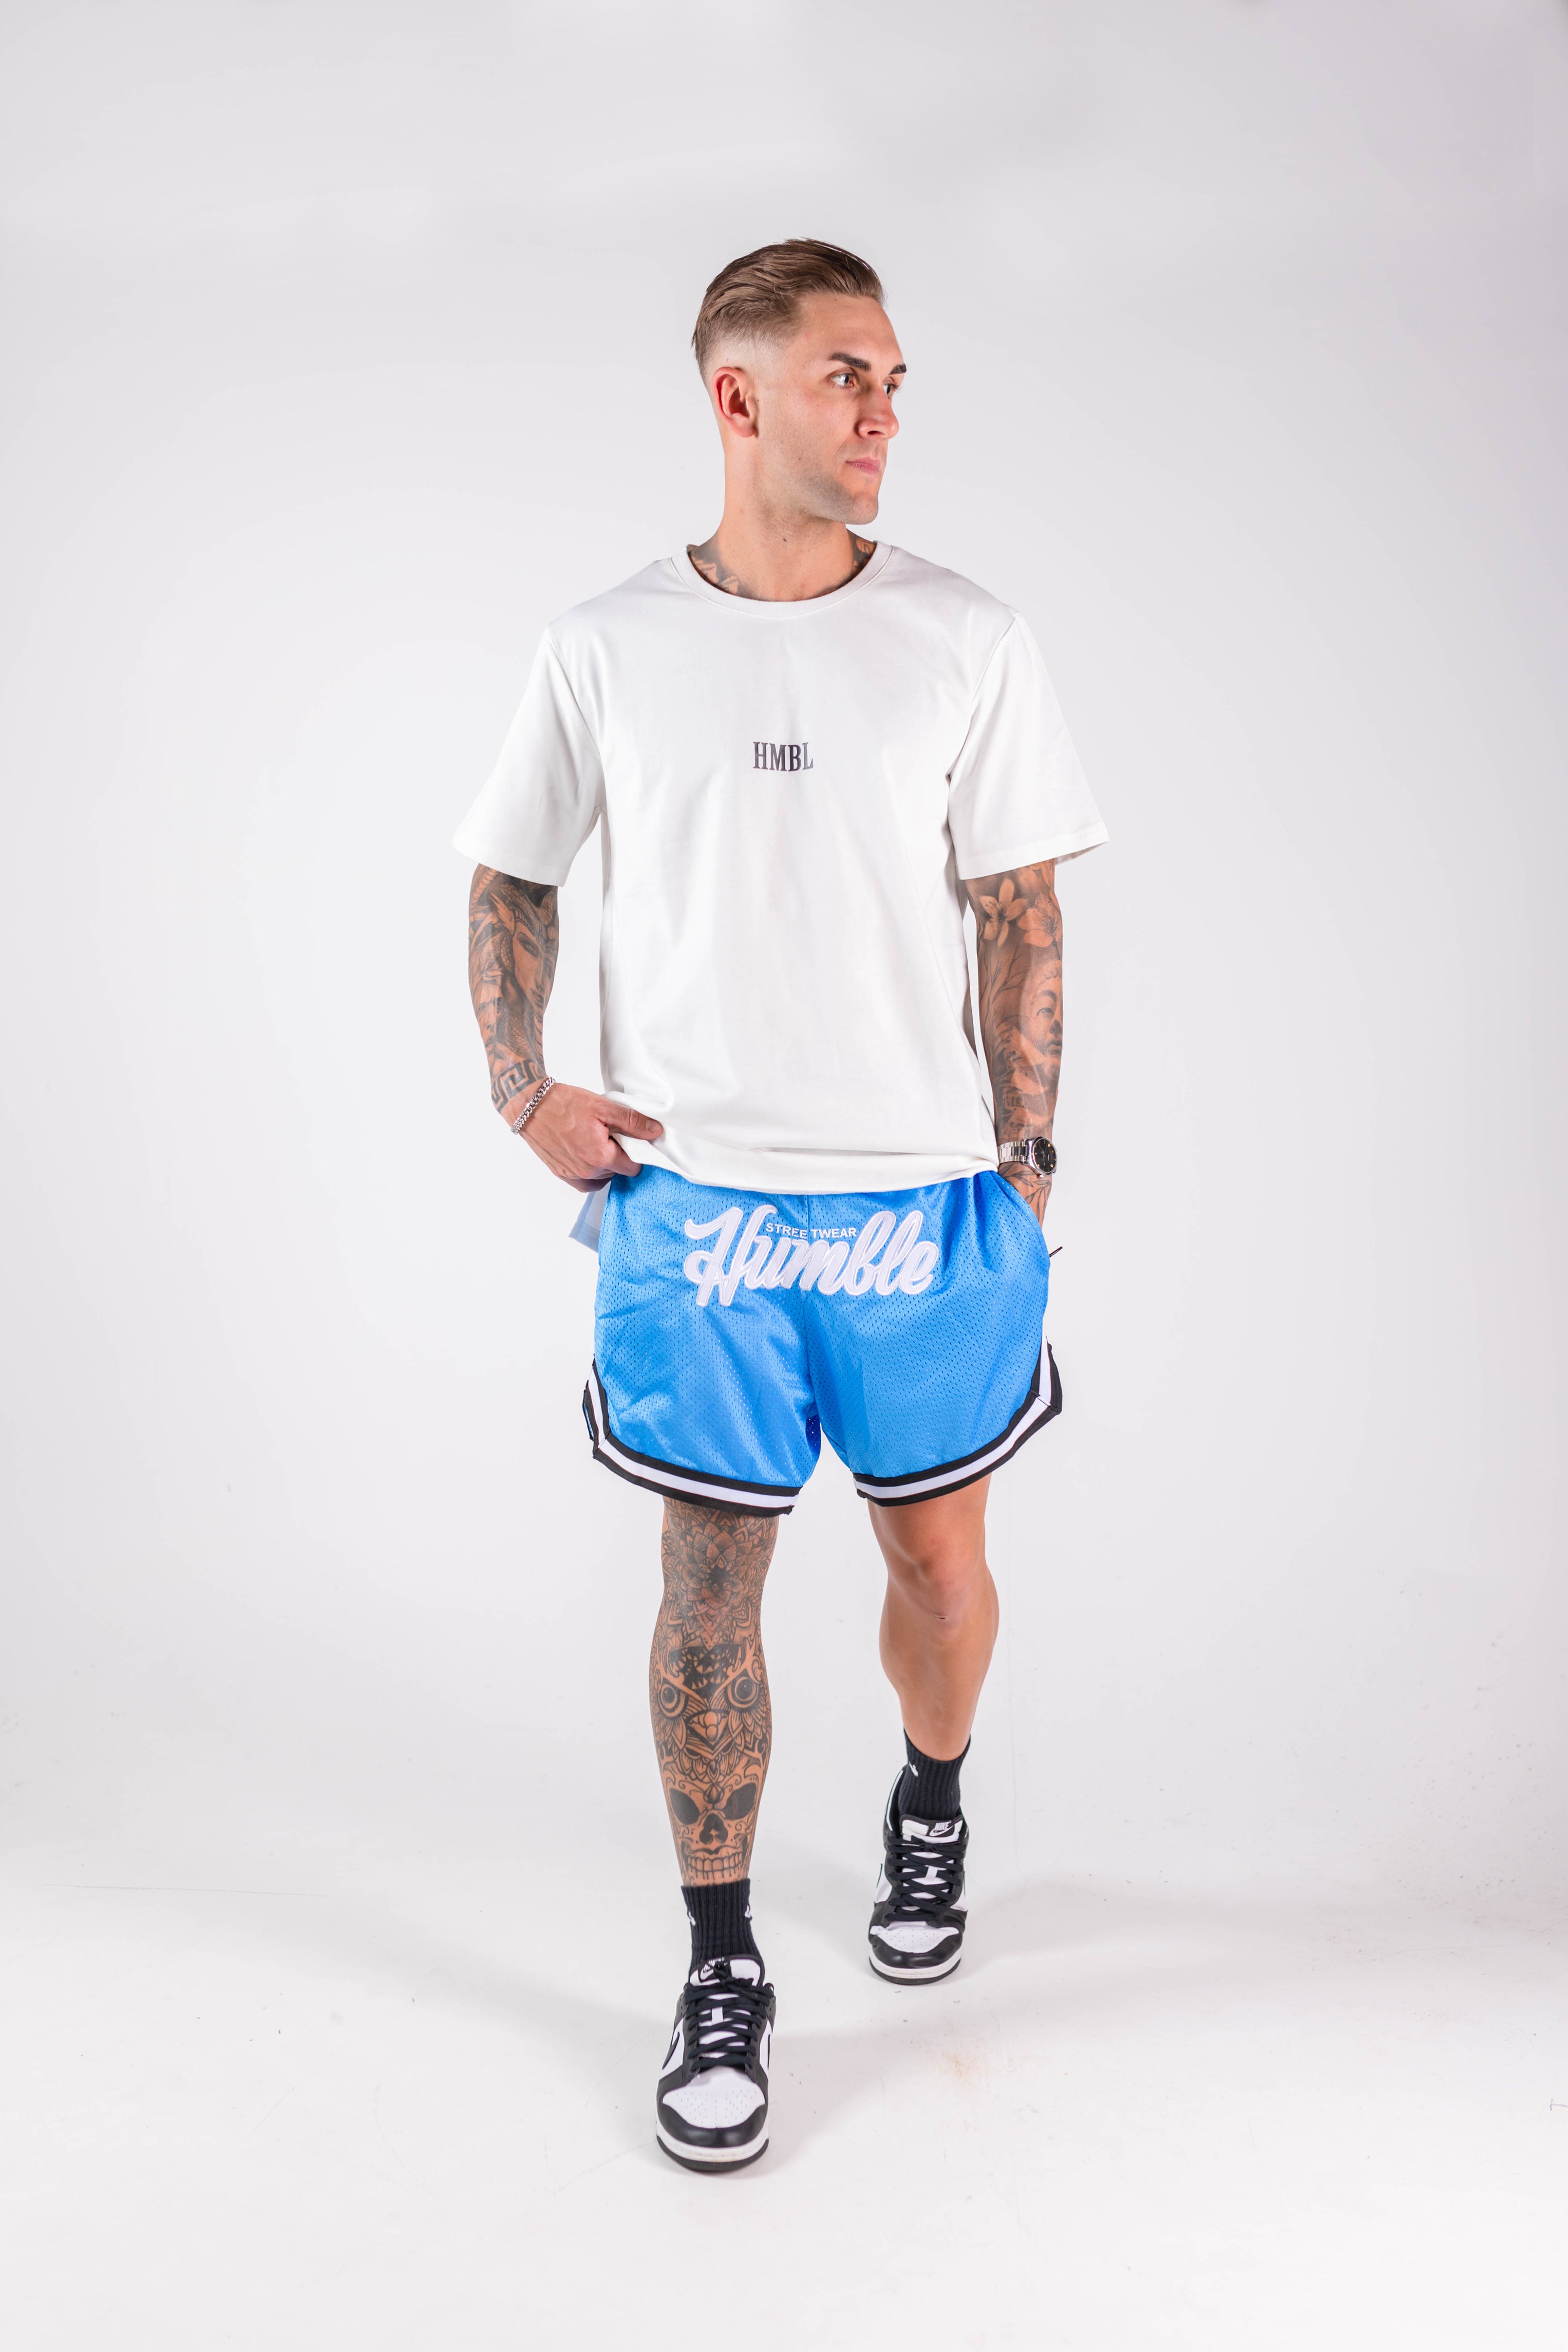 Sky Blue Basketball Shorts - Humble Streetwear